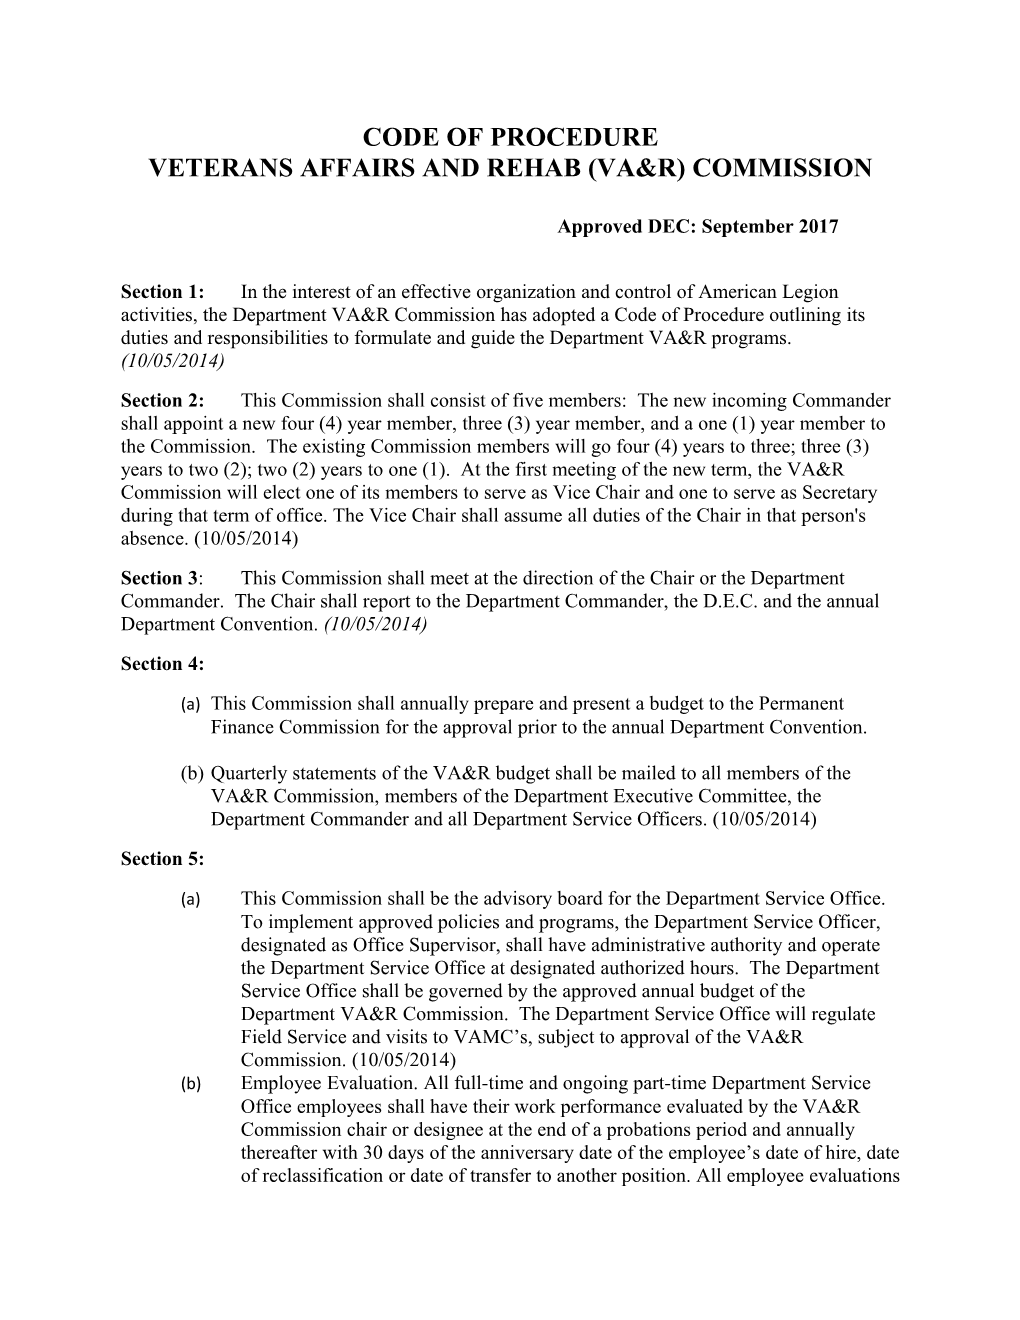 Veterans Affairs and Rehab (Va&R) Commission